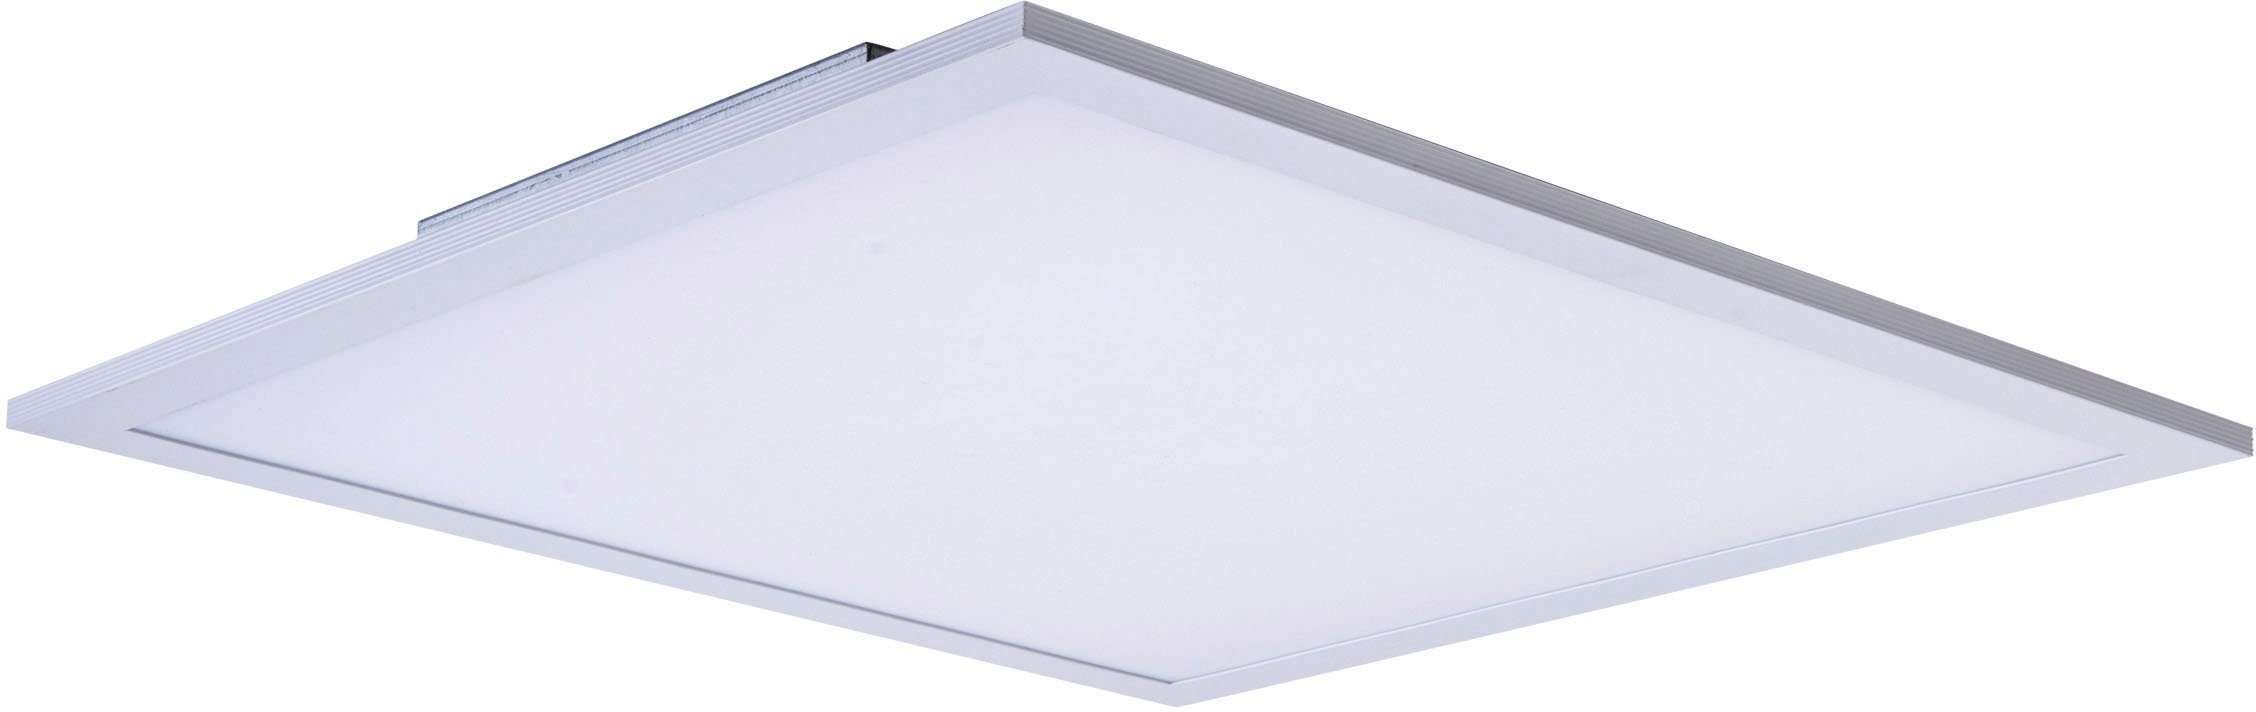 näve LED Panel Nicola, LED 6cm, Aufbaupanel H: neutralweiß 120 45x45cm, LED, integriert, Neutralweiß, Lichtfarbe fest weiß